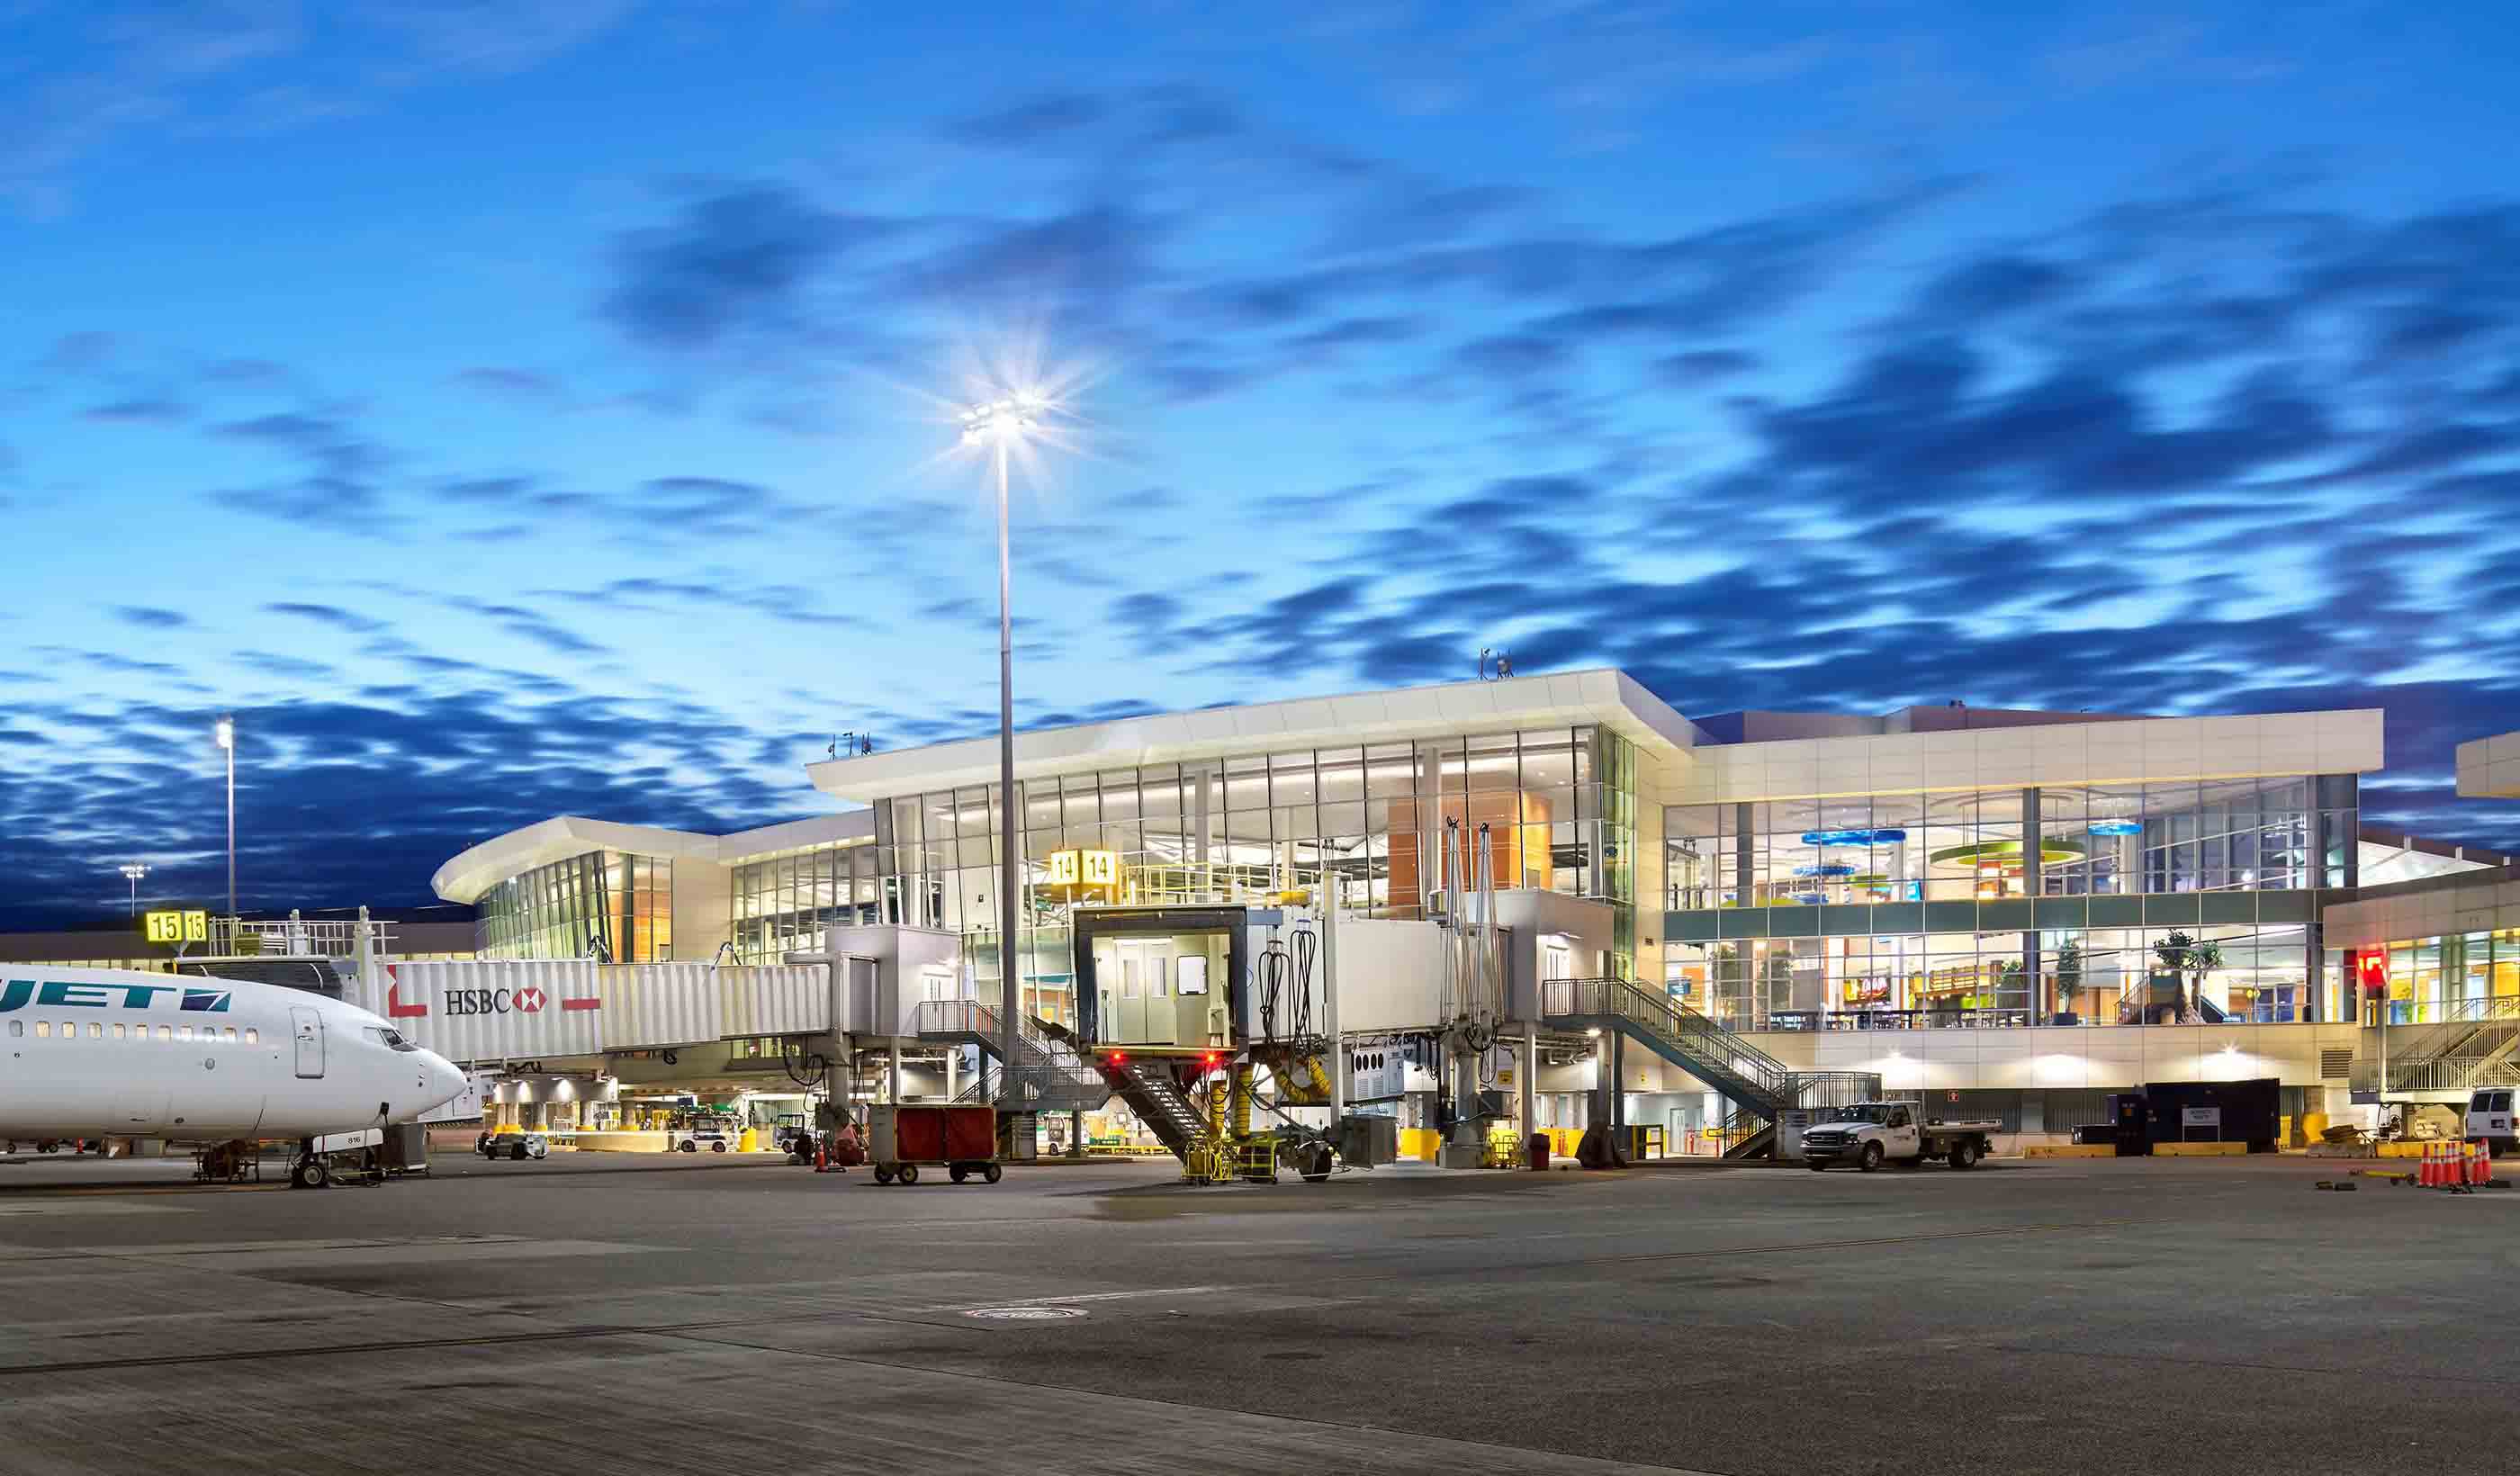 The next destination: Passive design airports